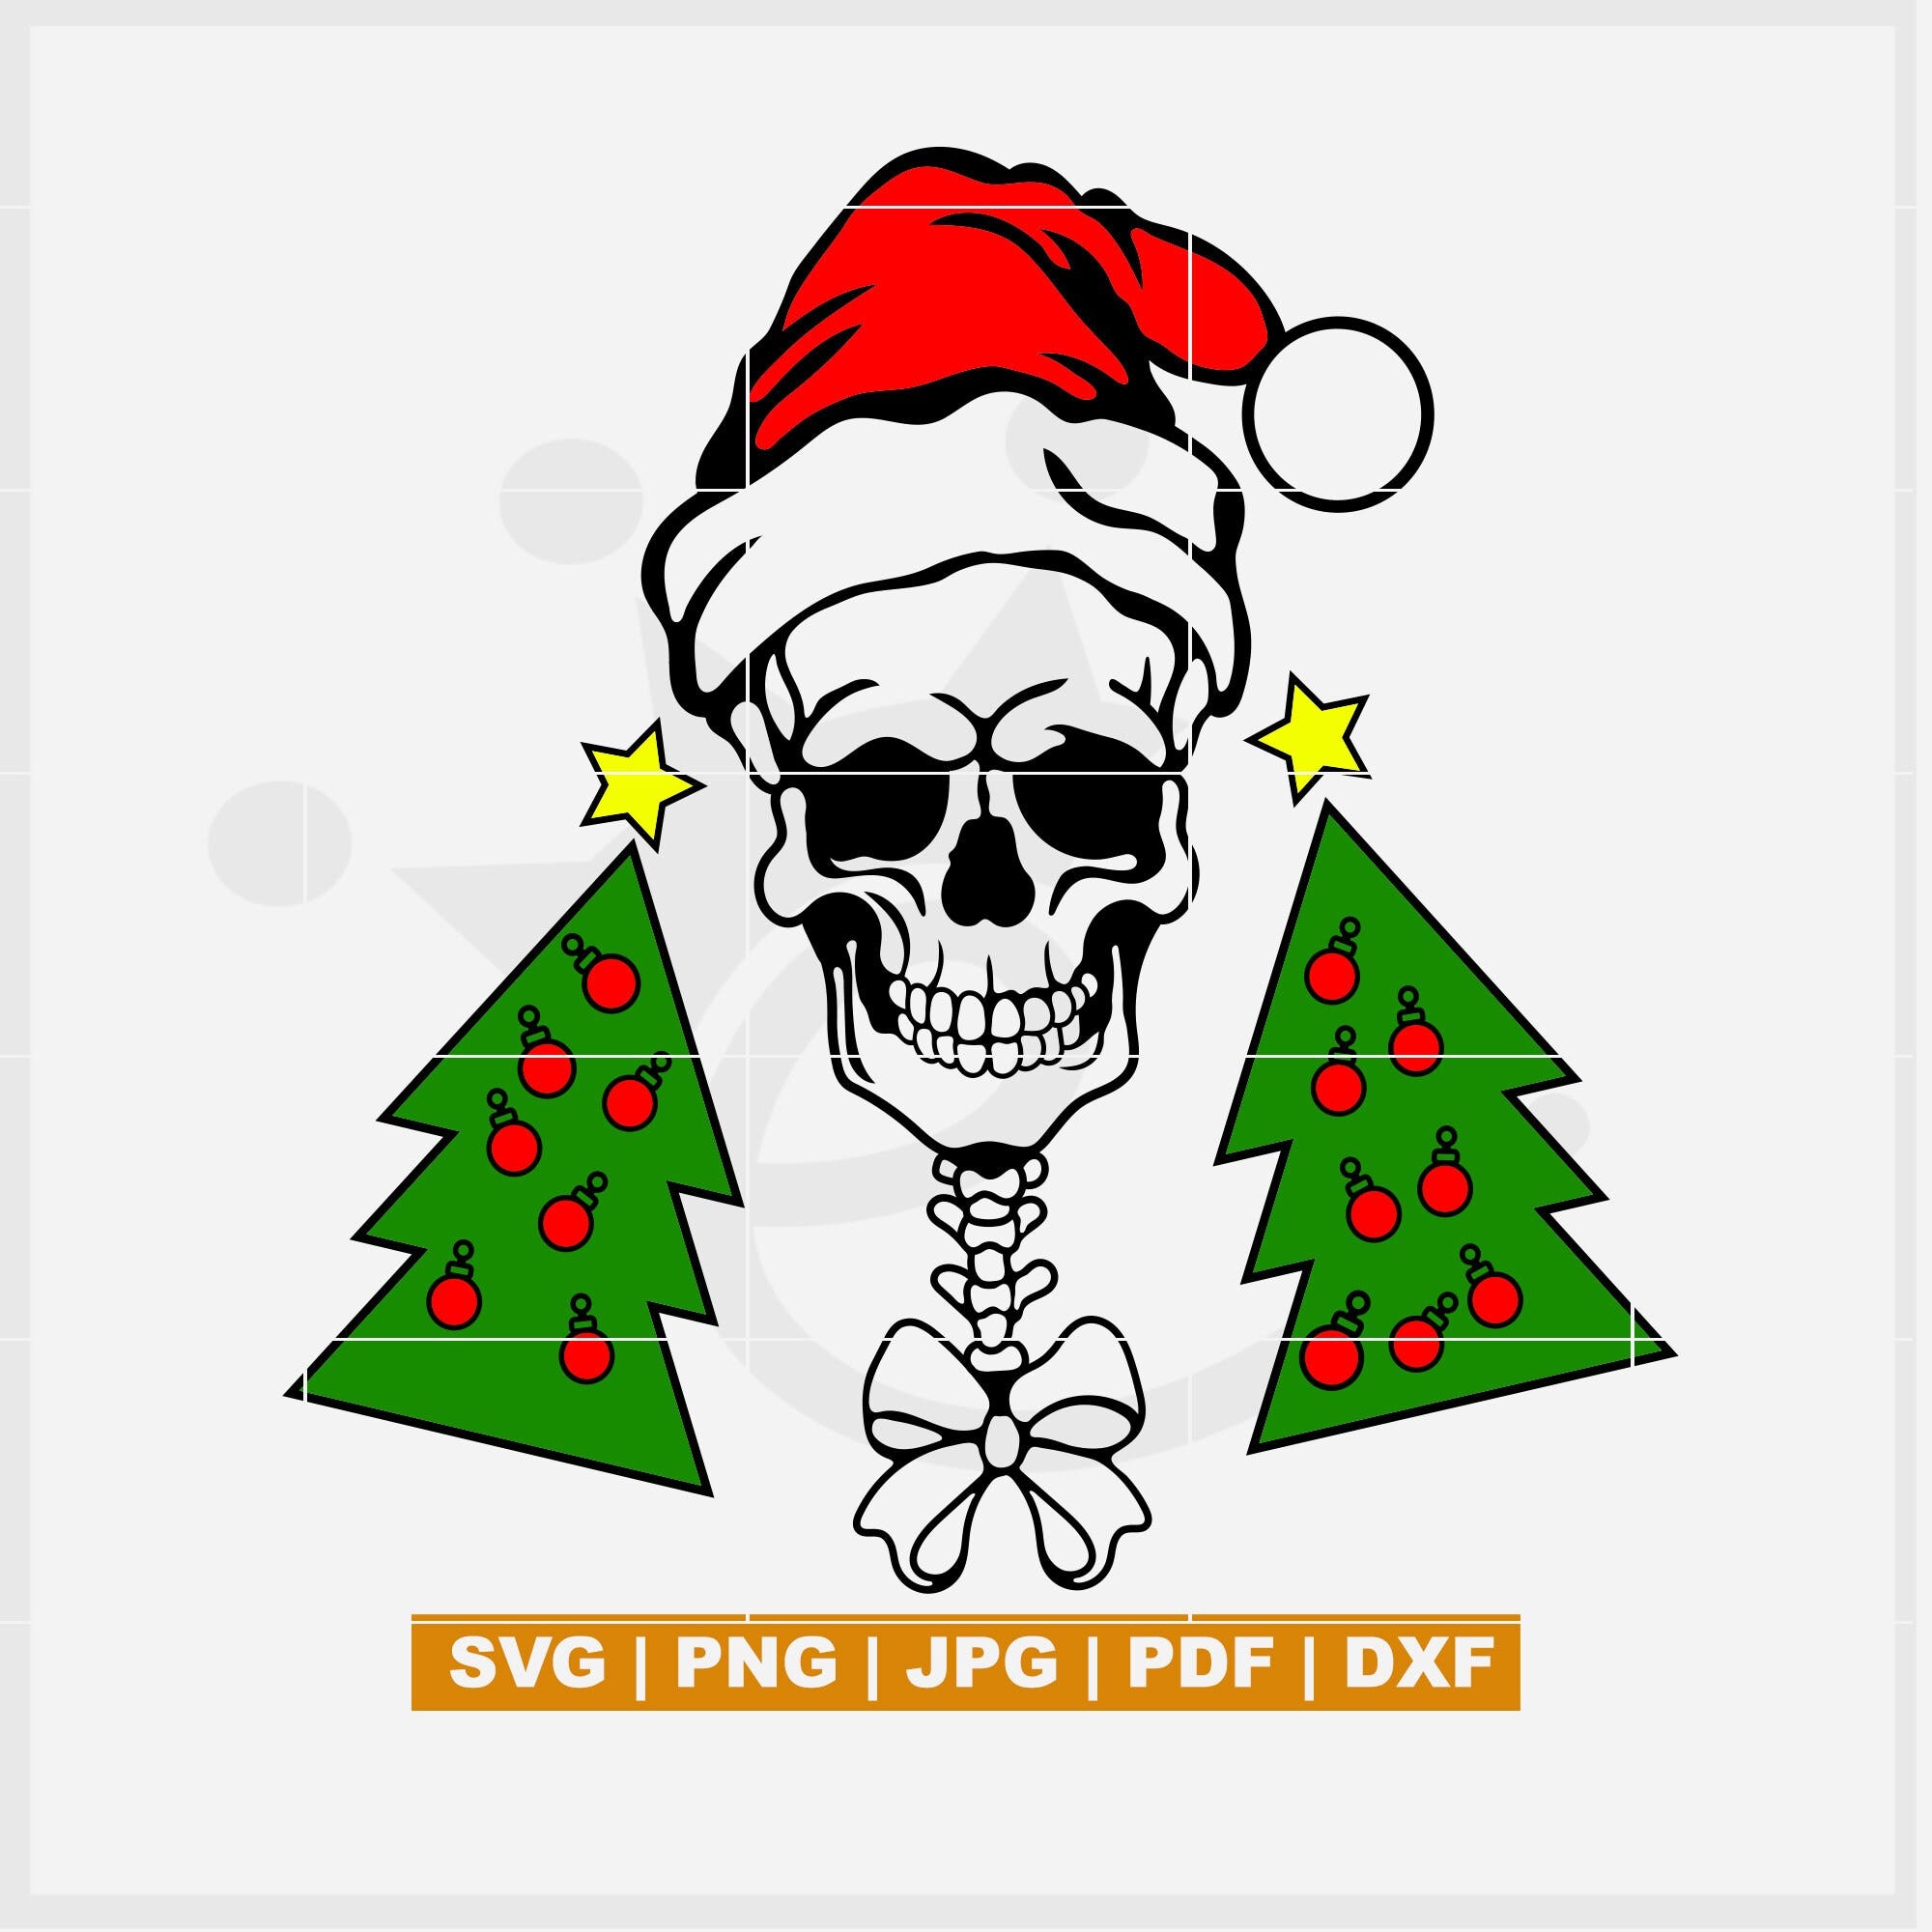 Skull svg, Skull with ribbon svg, skull wearing Santa hat svg, Skeleton svg, skull printables, Skeleton head with Christmas trees